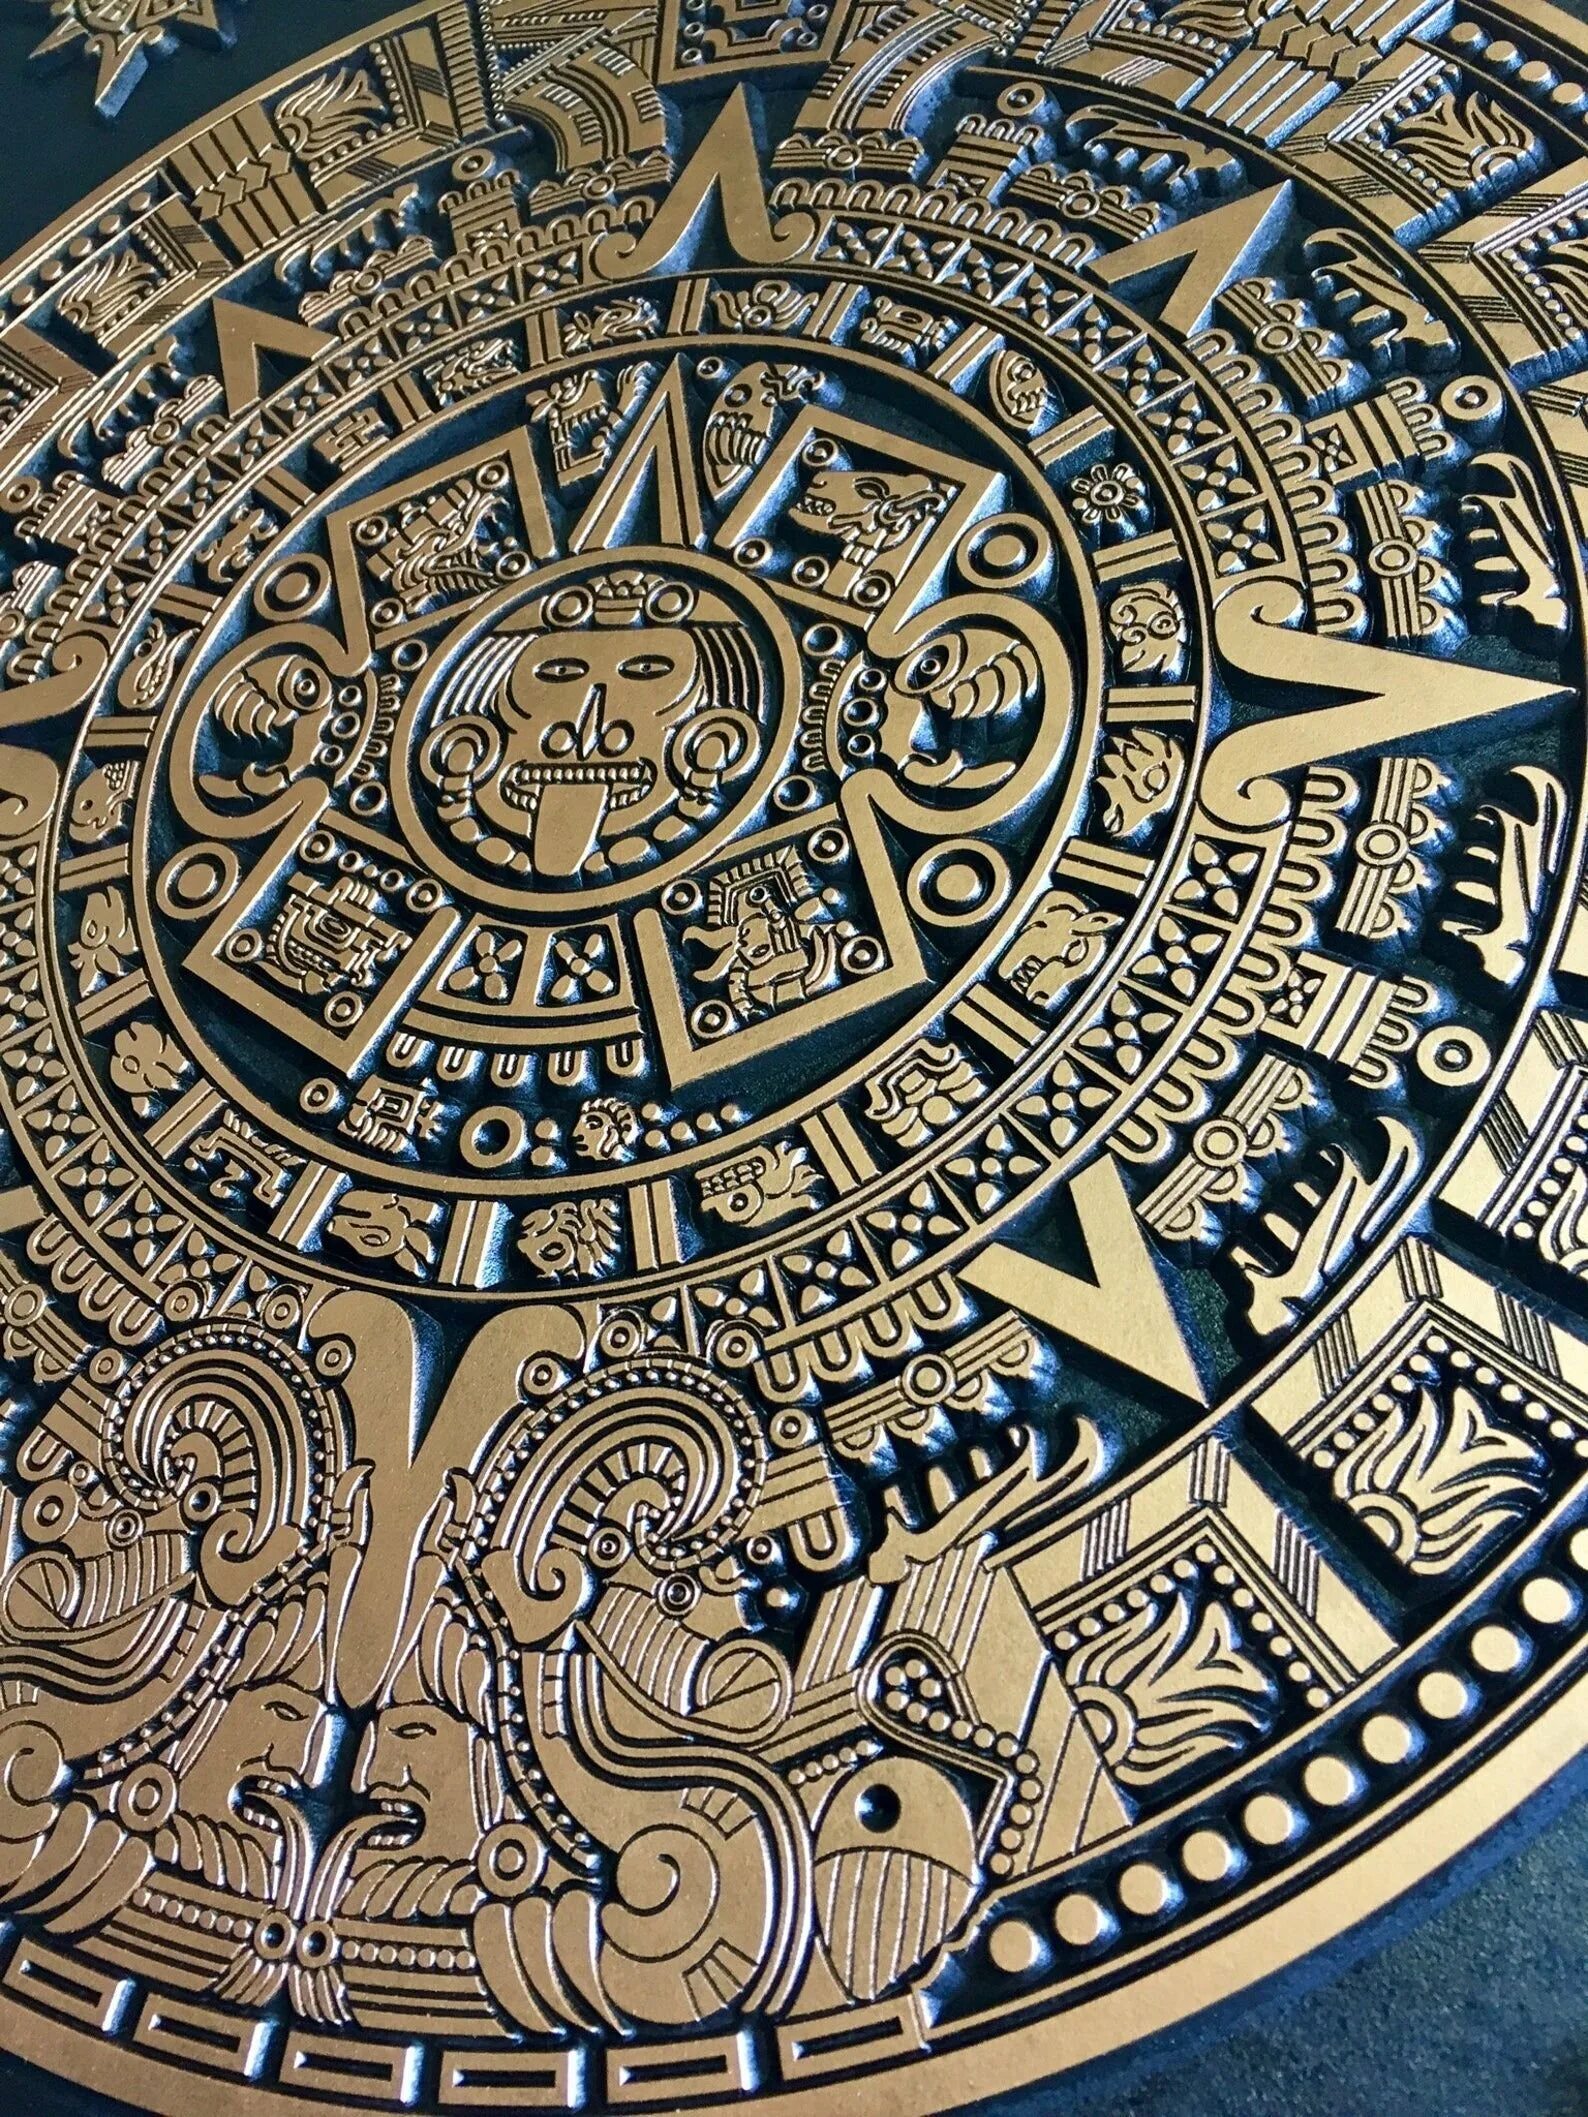 Календарь майя картинки. Камень солнца ацтеков. Древний Ацтекский календарь. Ацтекский календарь Майя. Ацтекский календарный «камень солнца».